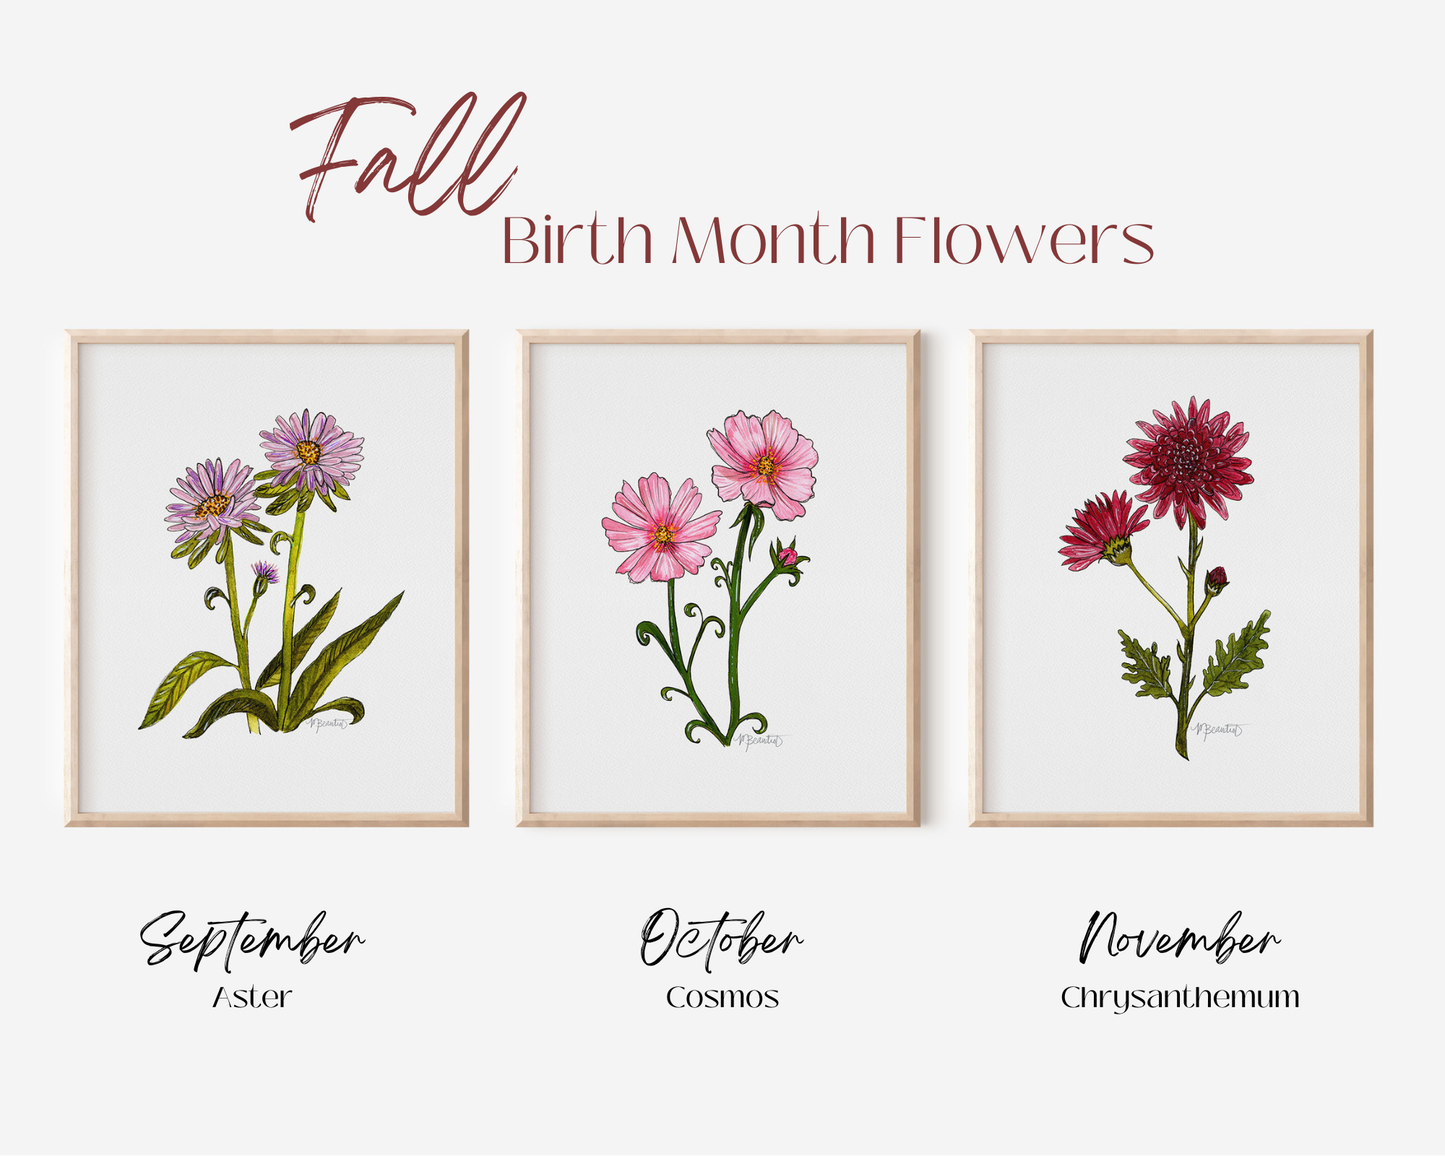 October Cosmos Flower Watercolor Birth Month Flower Botanical Art Print